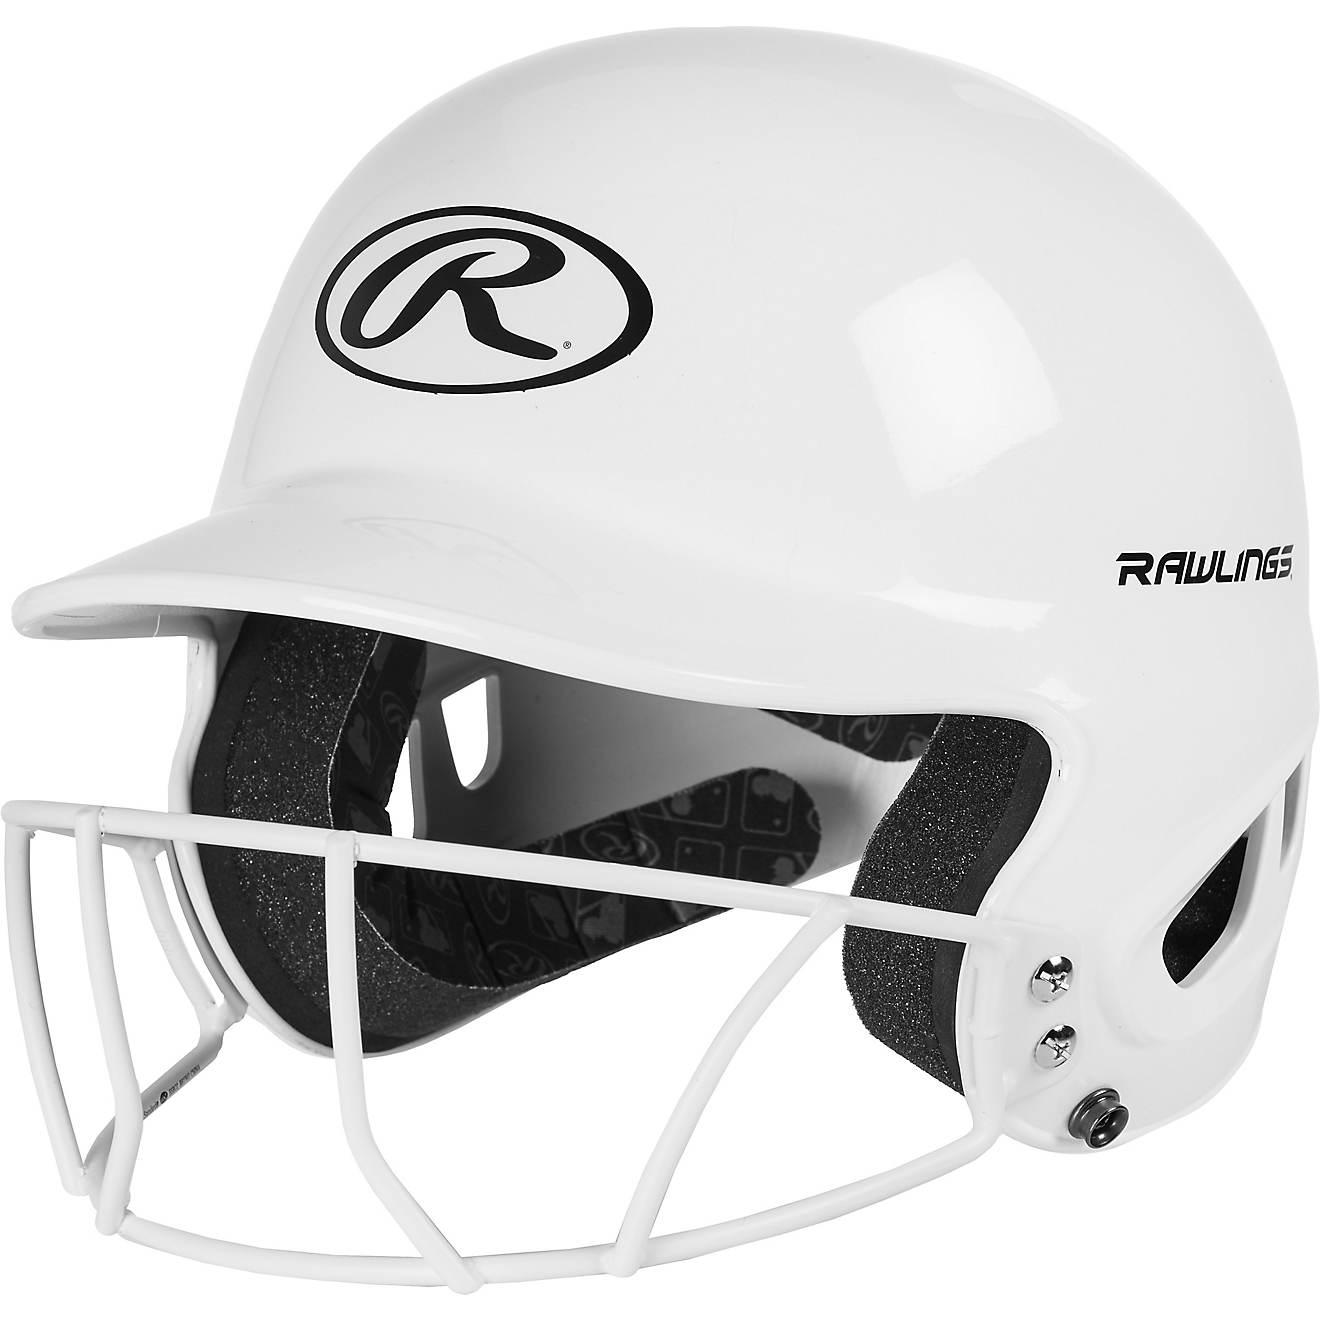 Details about   Rawlings Boys Youth T ball Baseball Girls Softball Batting helmet face guard